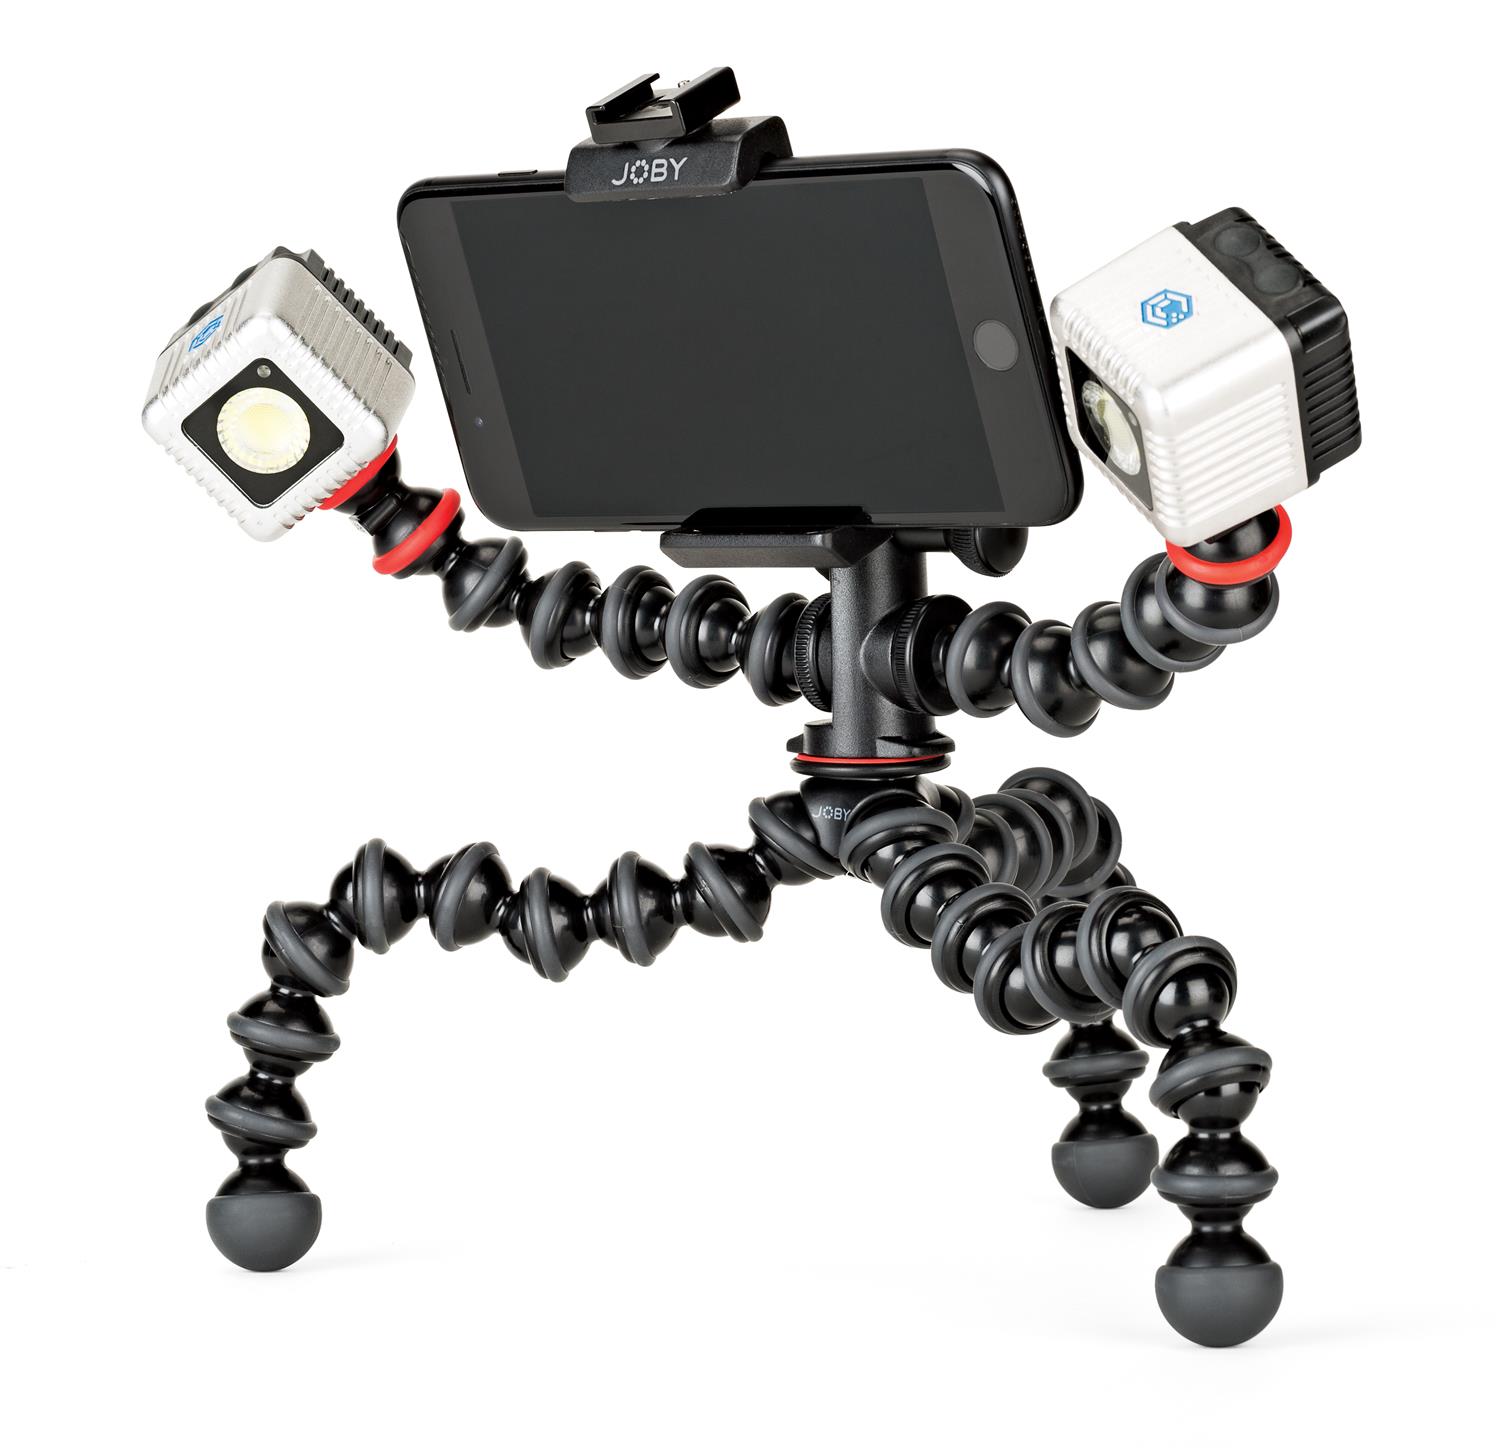 Joby GorillaPod Mobile Rig flexibles Smartphone-Stativ - Schwarz/Grau